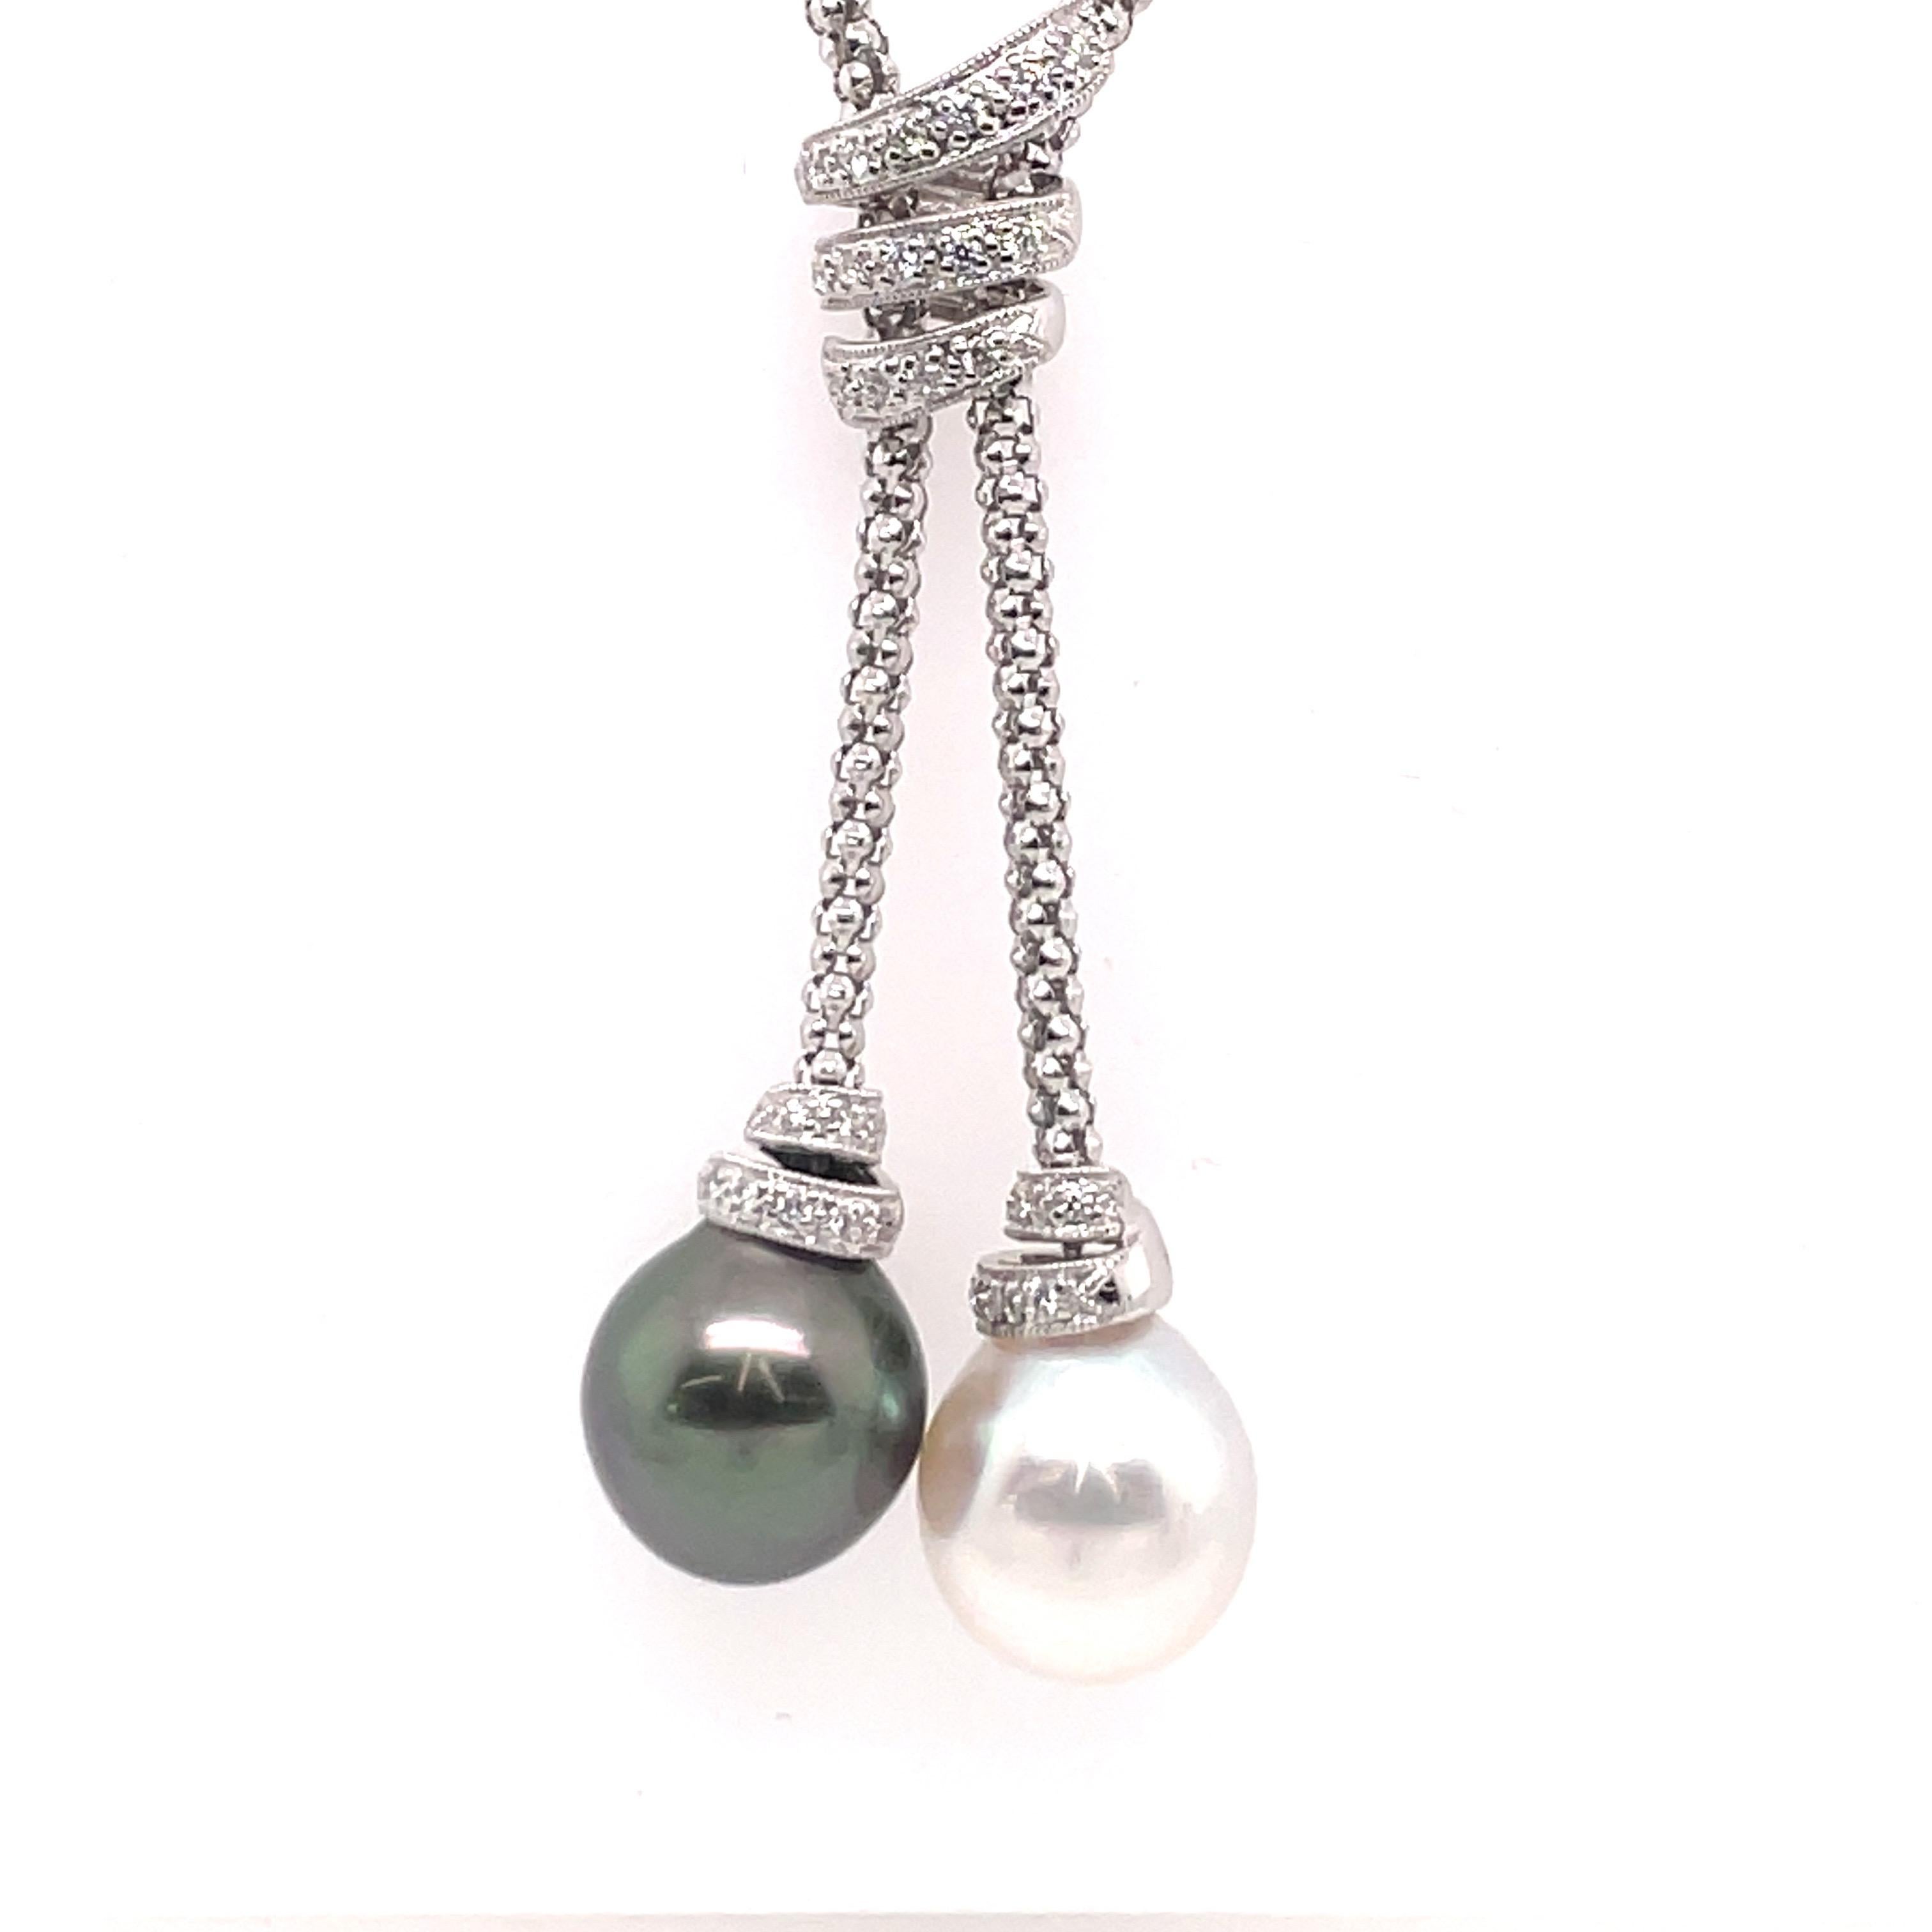 19 inch chain
tassel 5/8 13/16
31 diamonds 0.30 cts.
12-13 mm pearls
